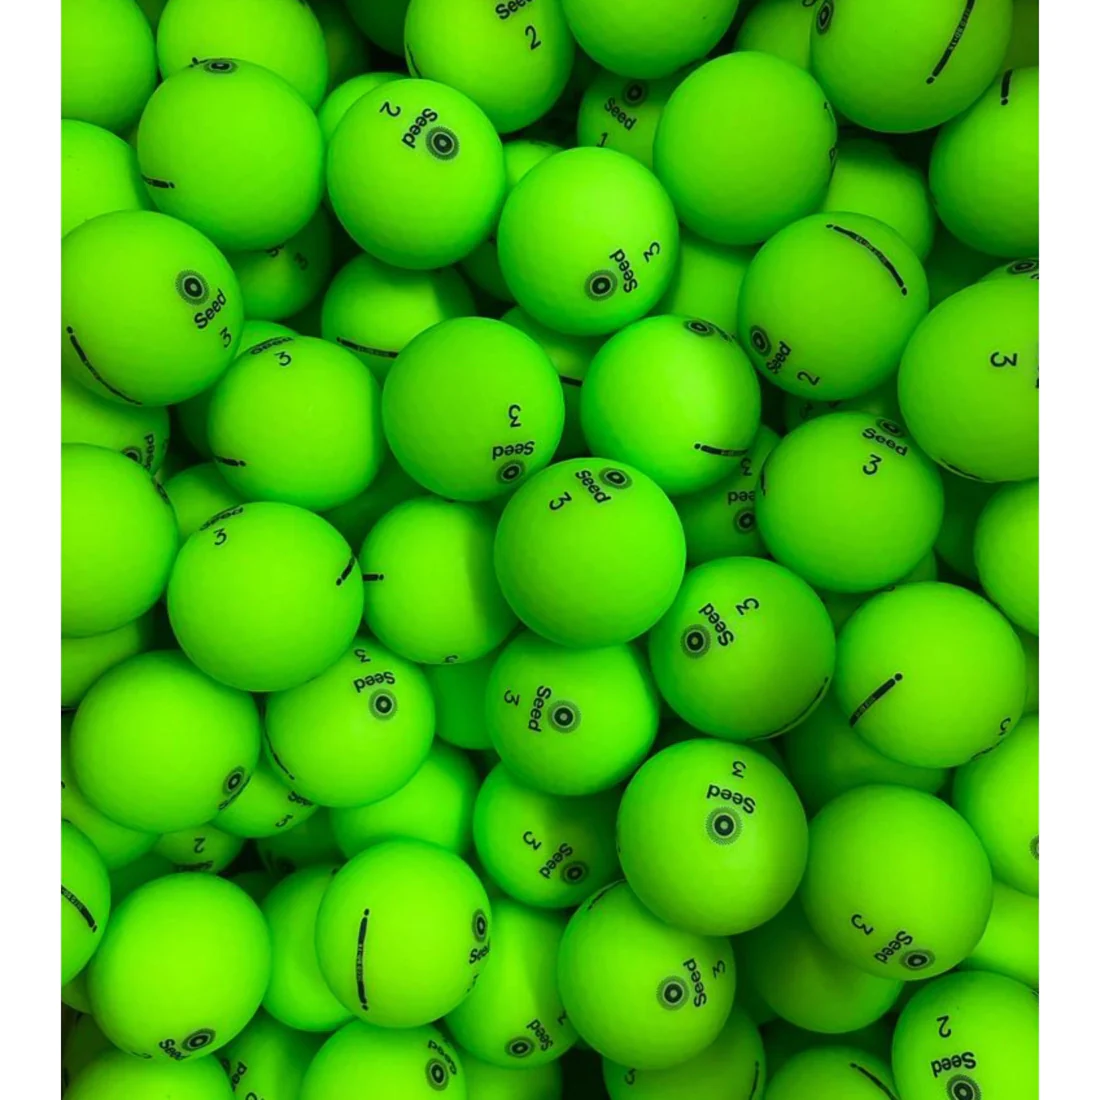 Seed Green used golf balls